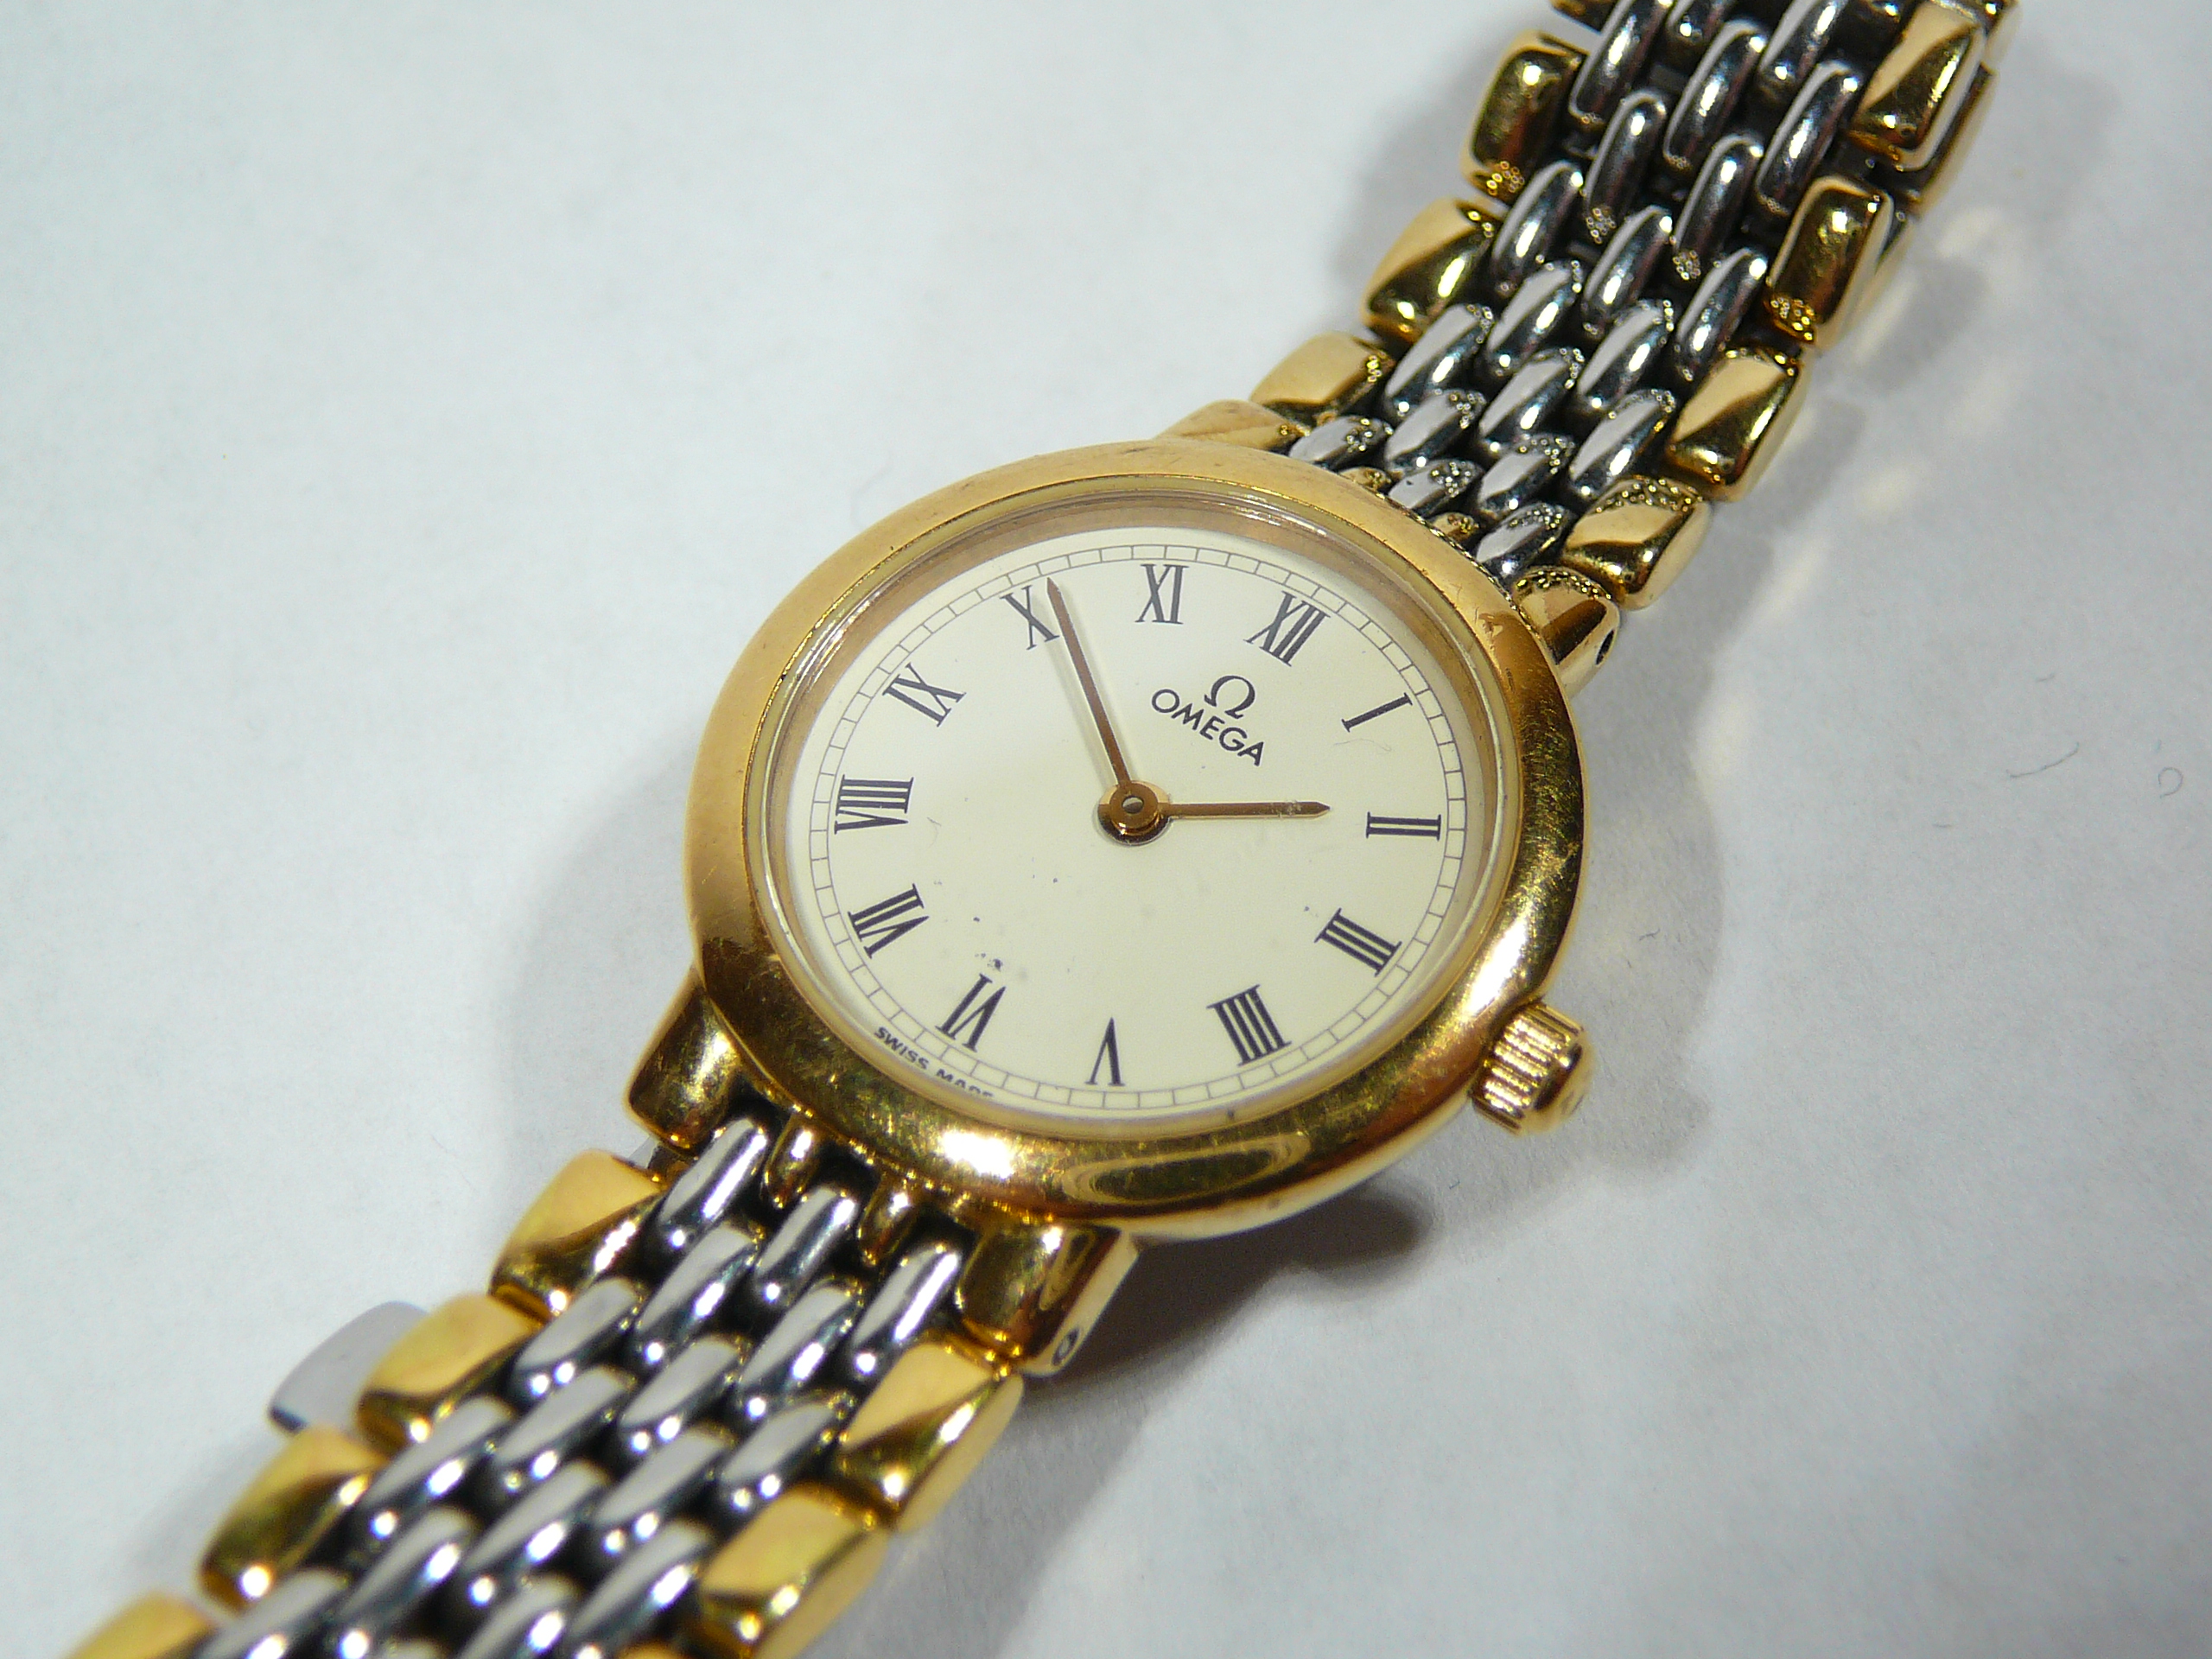 Ladies Omega Wrist Watch - Image 2 of 3